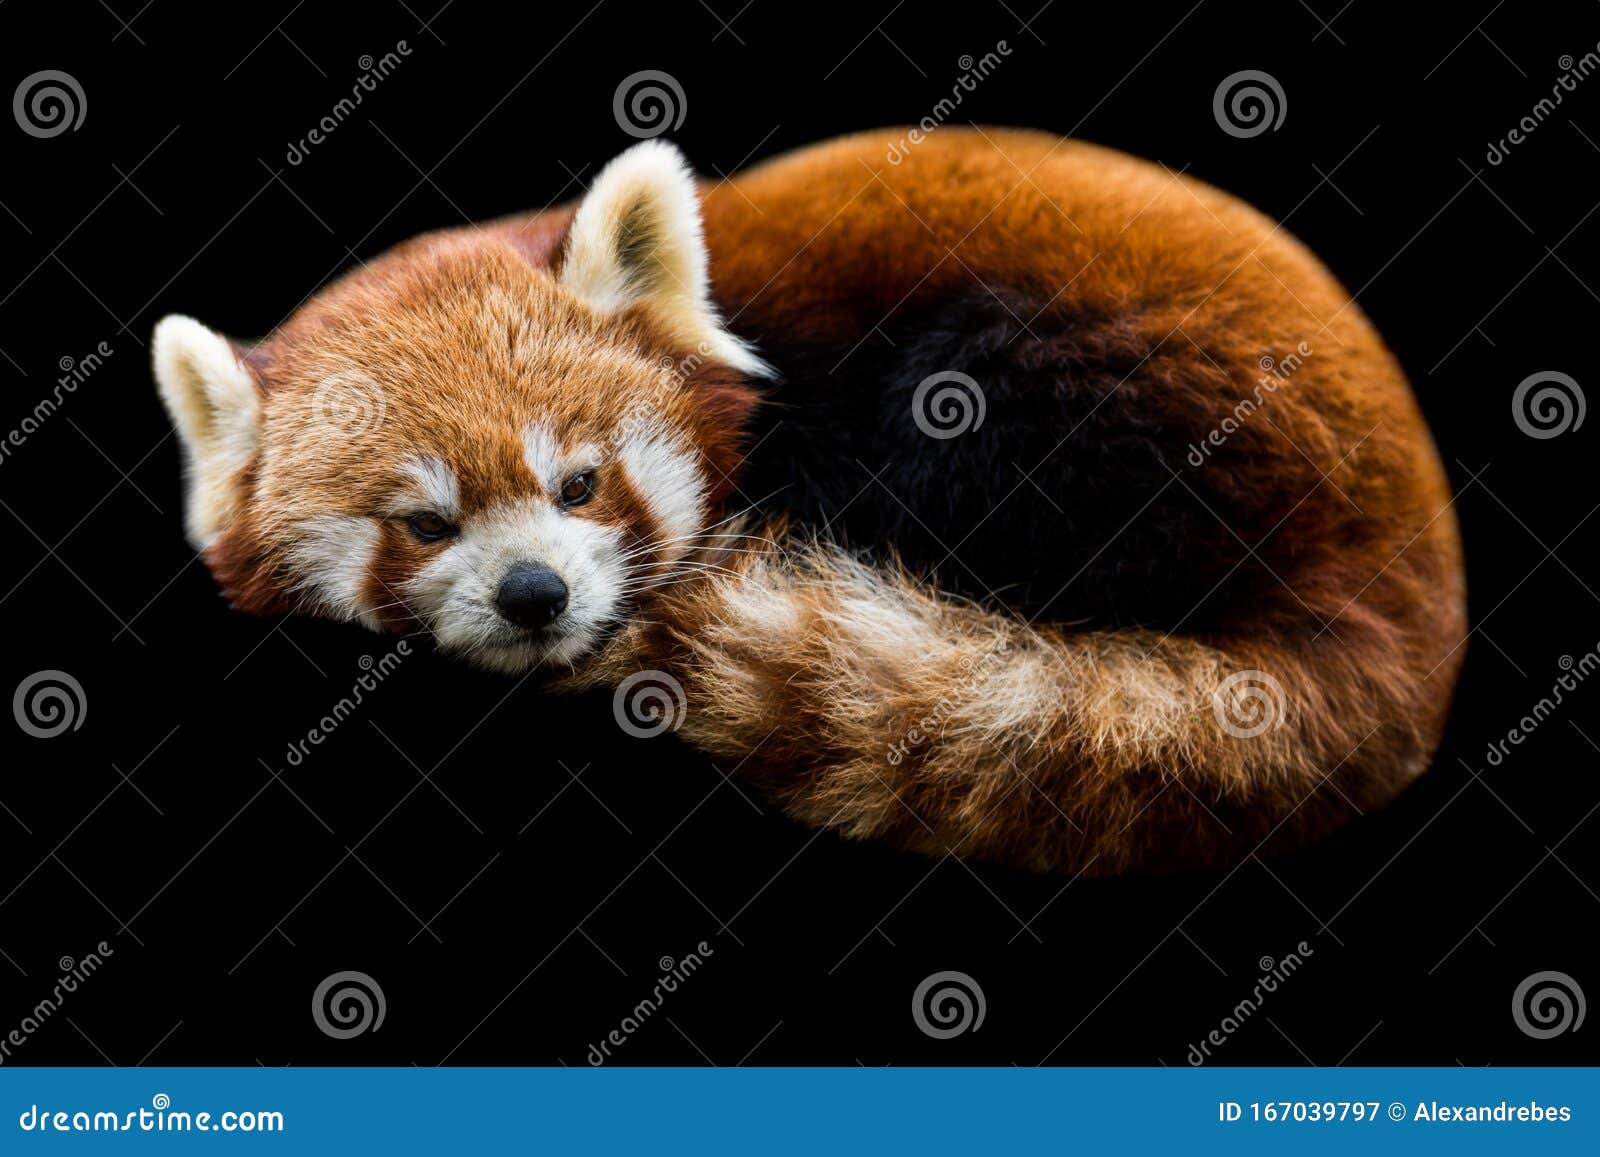 Landbrug Flourish indebære Red Panda with a Black Background Stock Image - Image of forest, animal:  167039797